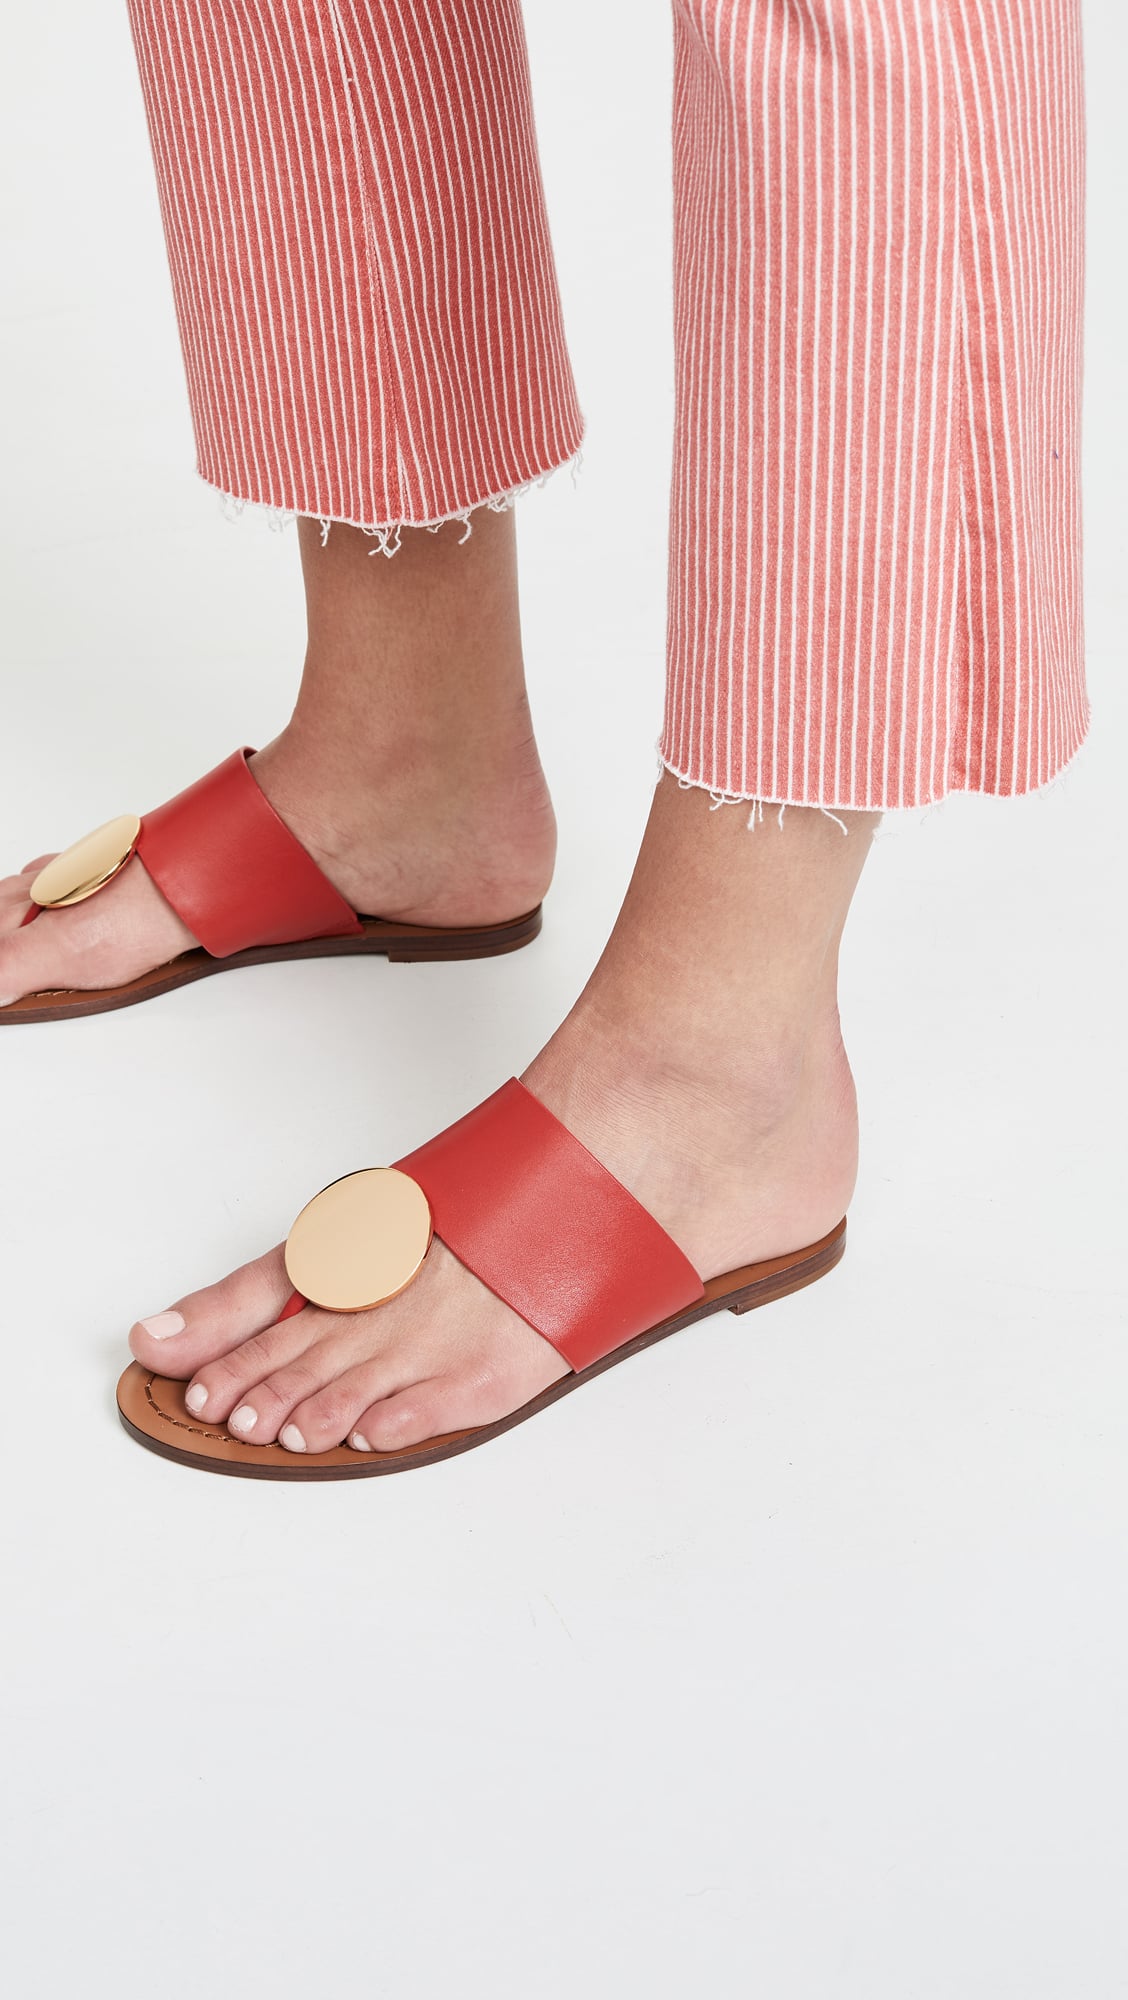 patos striped disk sandal